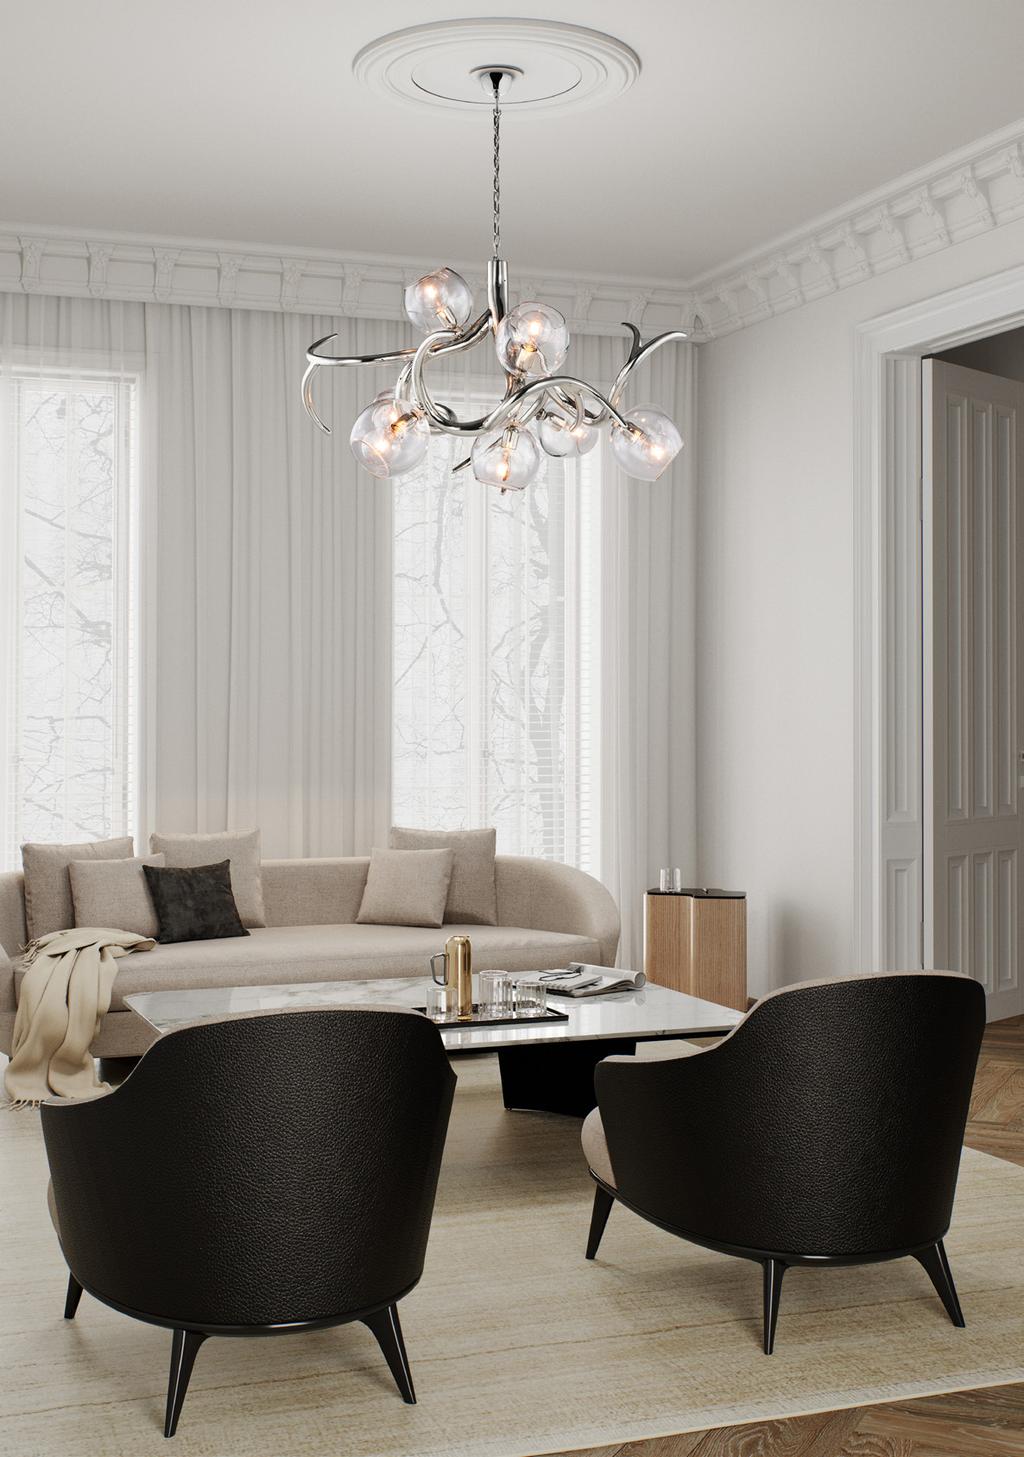 The new additions include a flirtatious Ersa floor lamp, as well as a striking Ersa ceiling light.